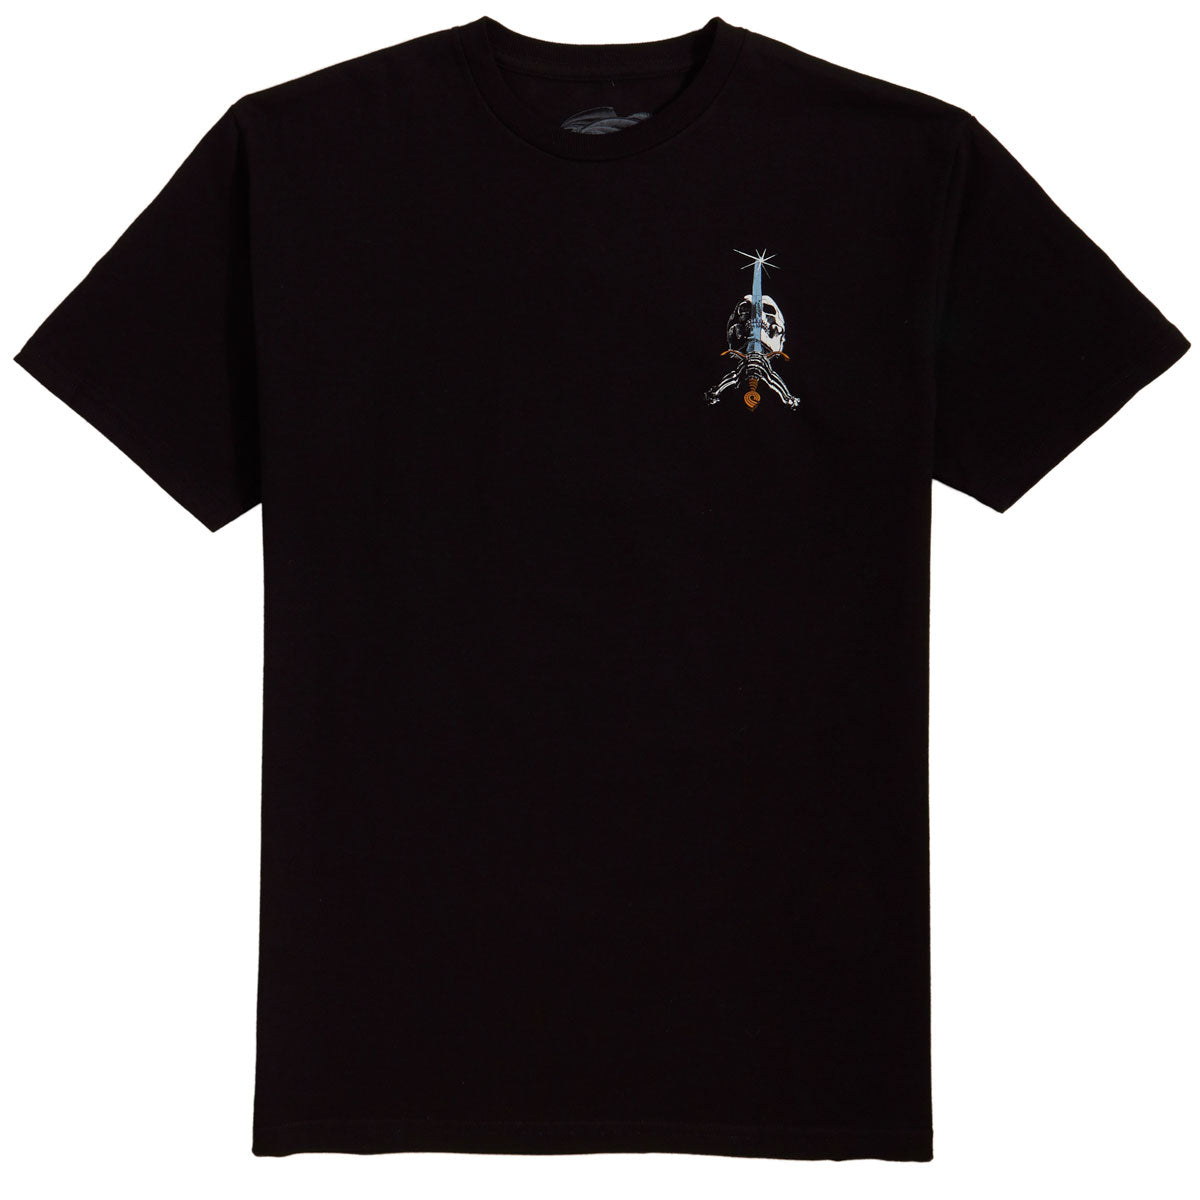 Powell-Peralta Skull and Sword T-Shirt - Black image 2